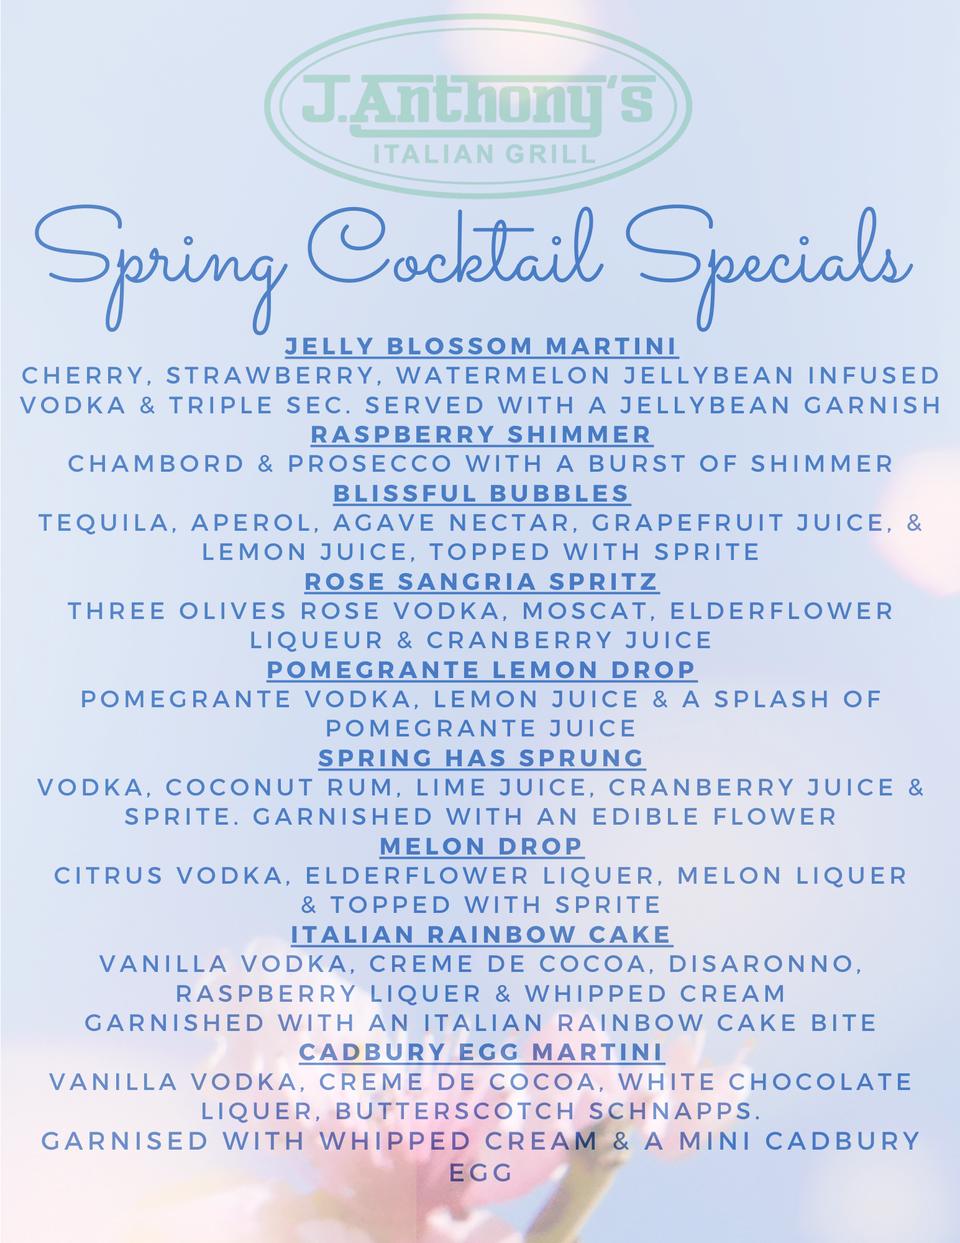 Spring cocktail specials